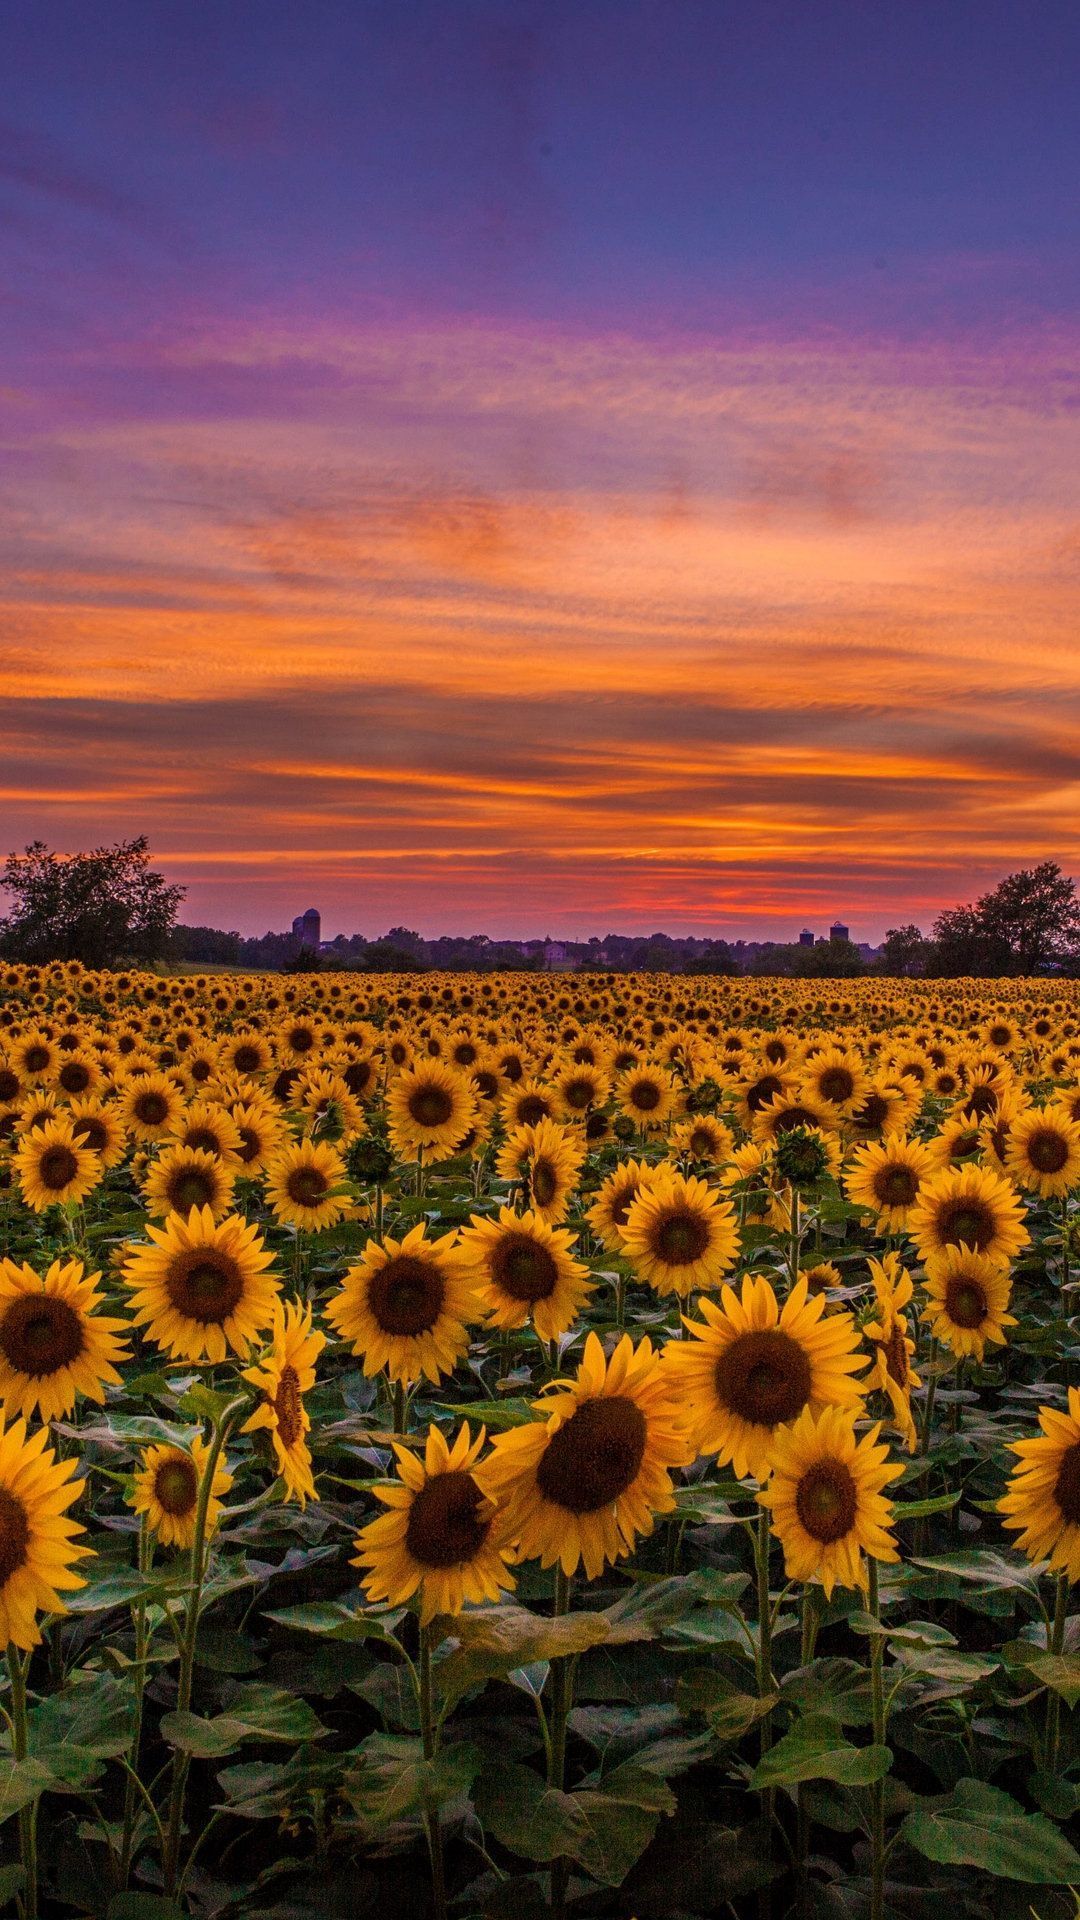 Sunflowers Field Sunset Wallpaper #sunflowerwallpaper in 2020